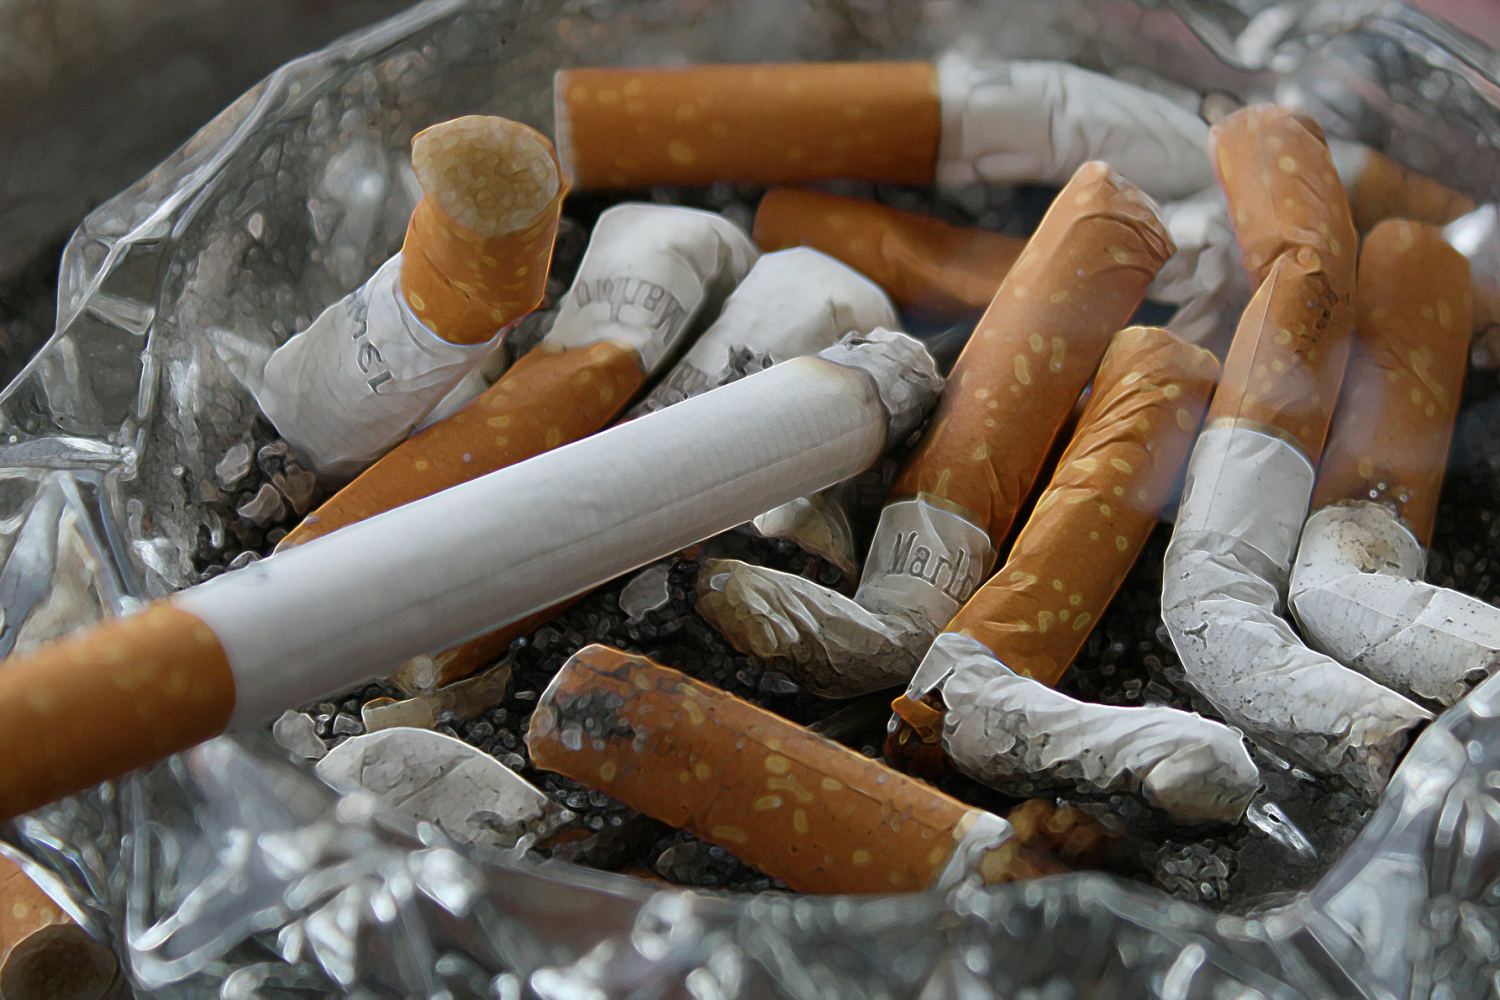 Consensus Reached On Smoking Age Increase Legislation